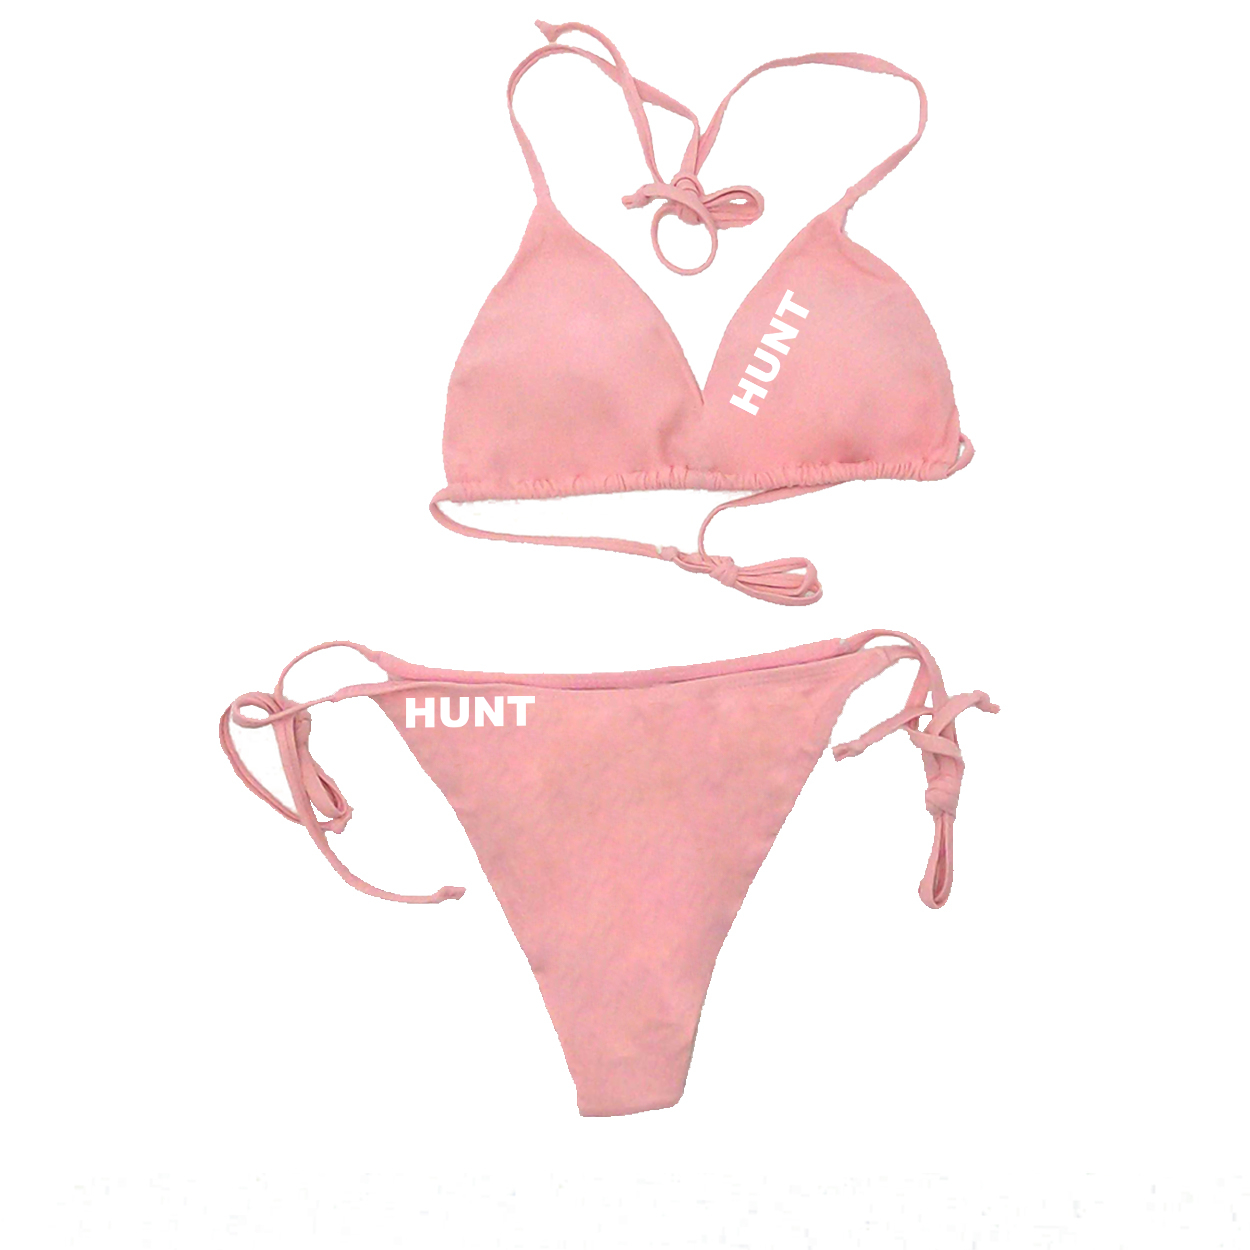 Hunt Brand Logo Classic Womens Padded Halter Triangle Tie Side Two-Piece Swimsuit Basics Bikini Pink (White Logo)